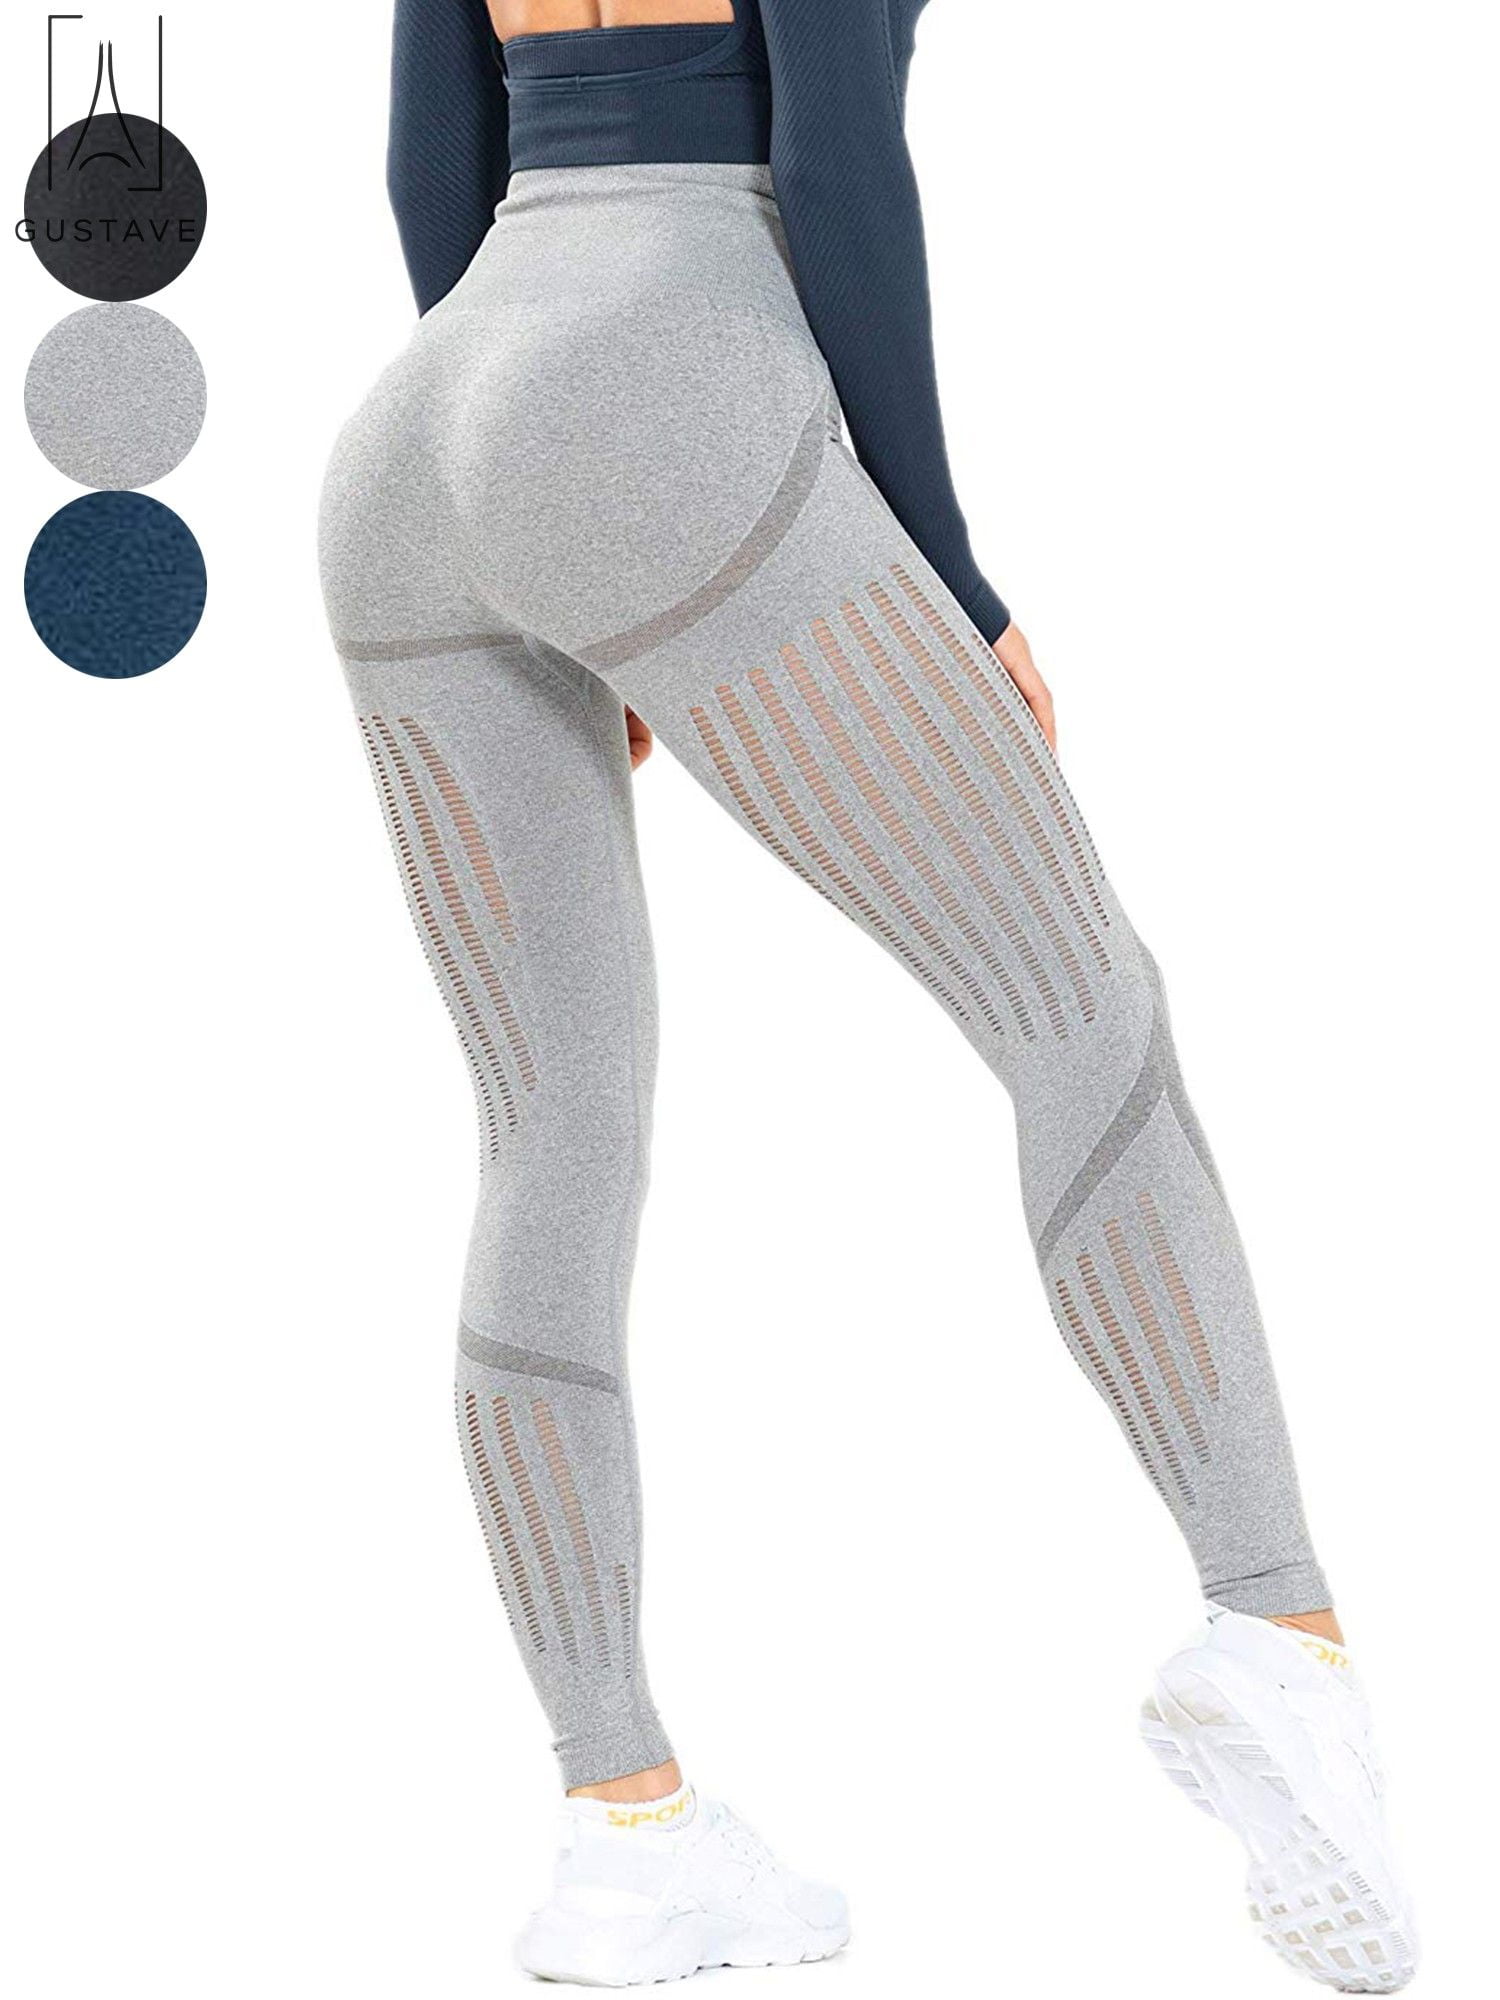 Gustave Women's High Waist Mesh Yoga Pants Capris Tummy Control Running  Workout Leggings Athletic Capri Pants with Pockets Black, S